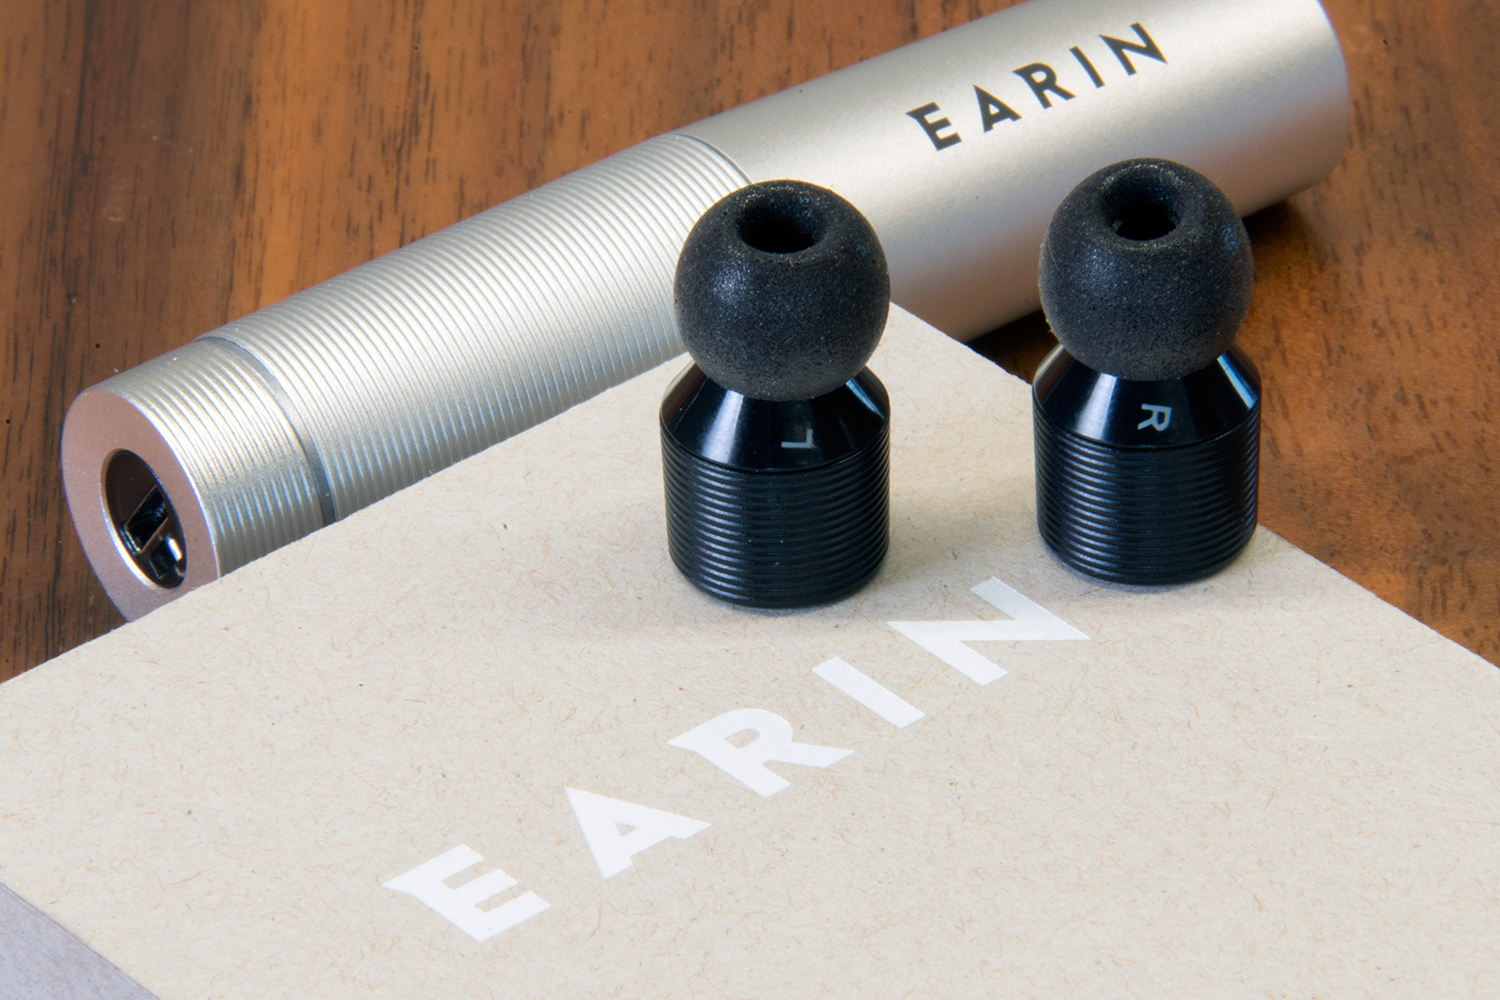 earin wireless earbuds hands on review video bt hero1